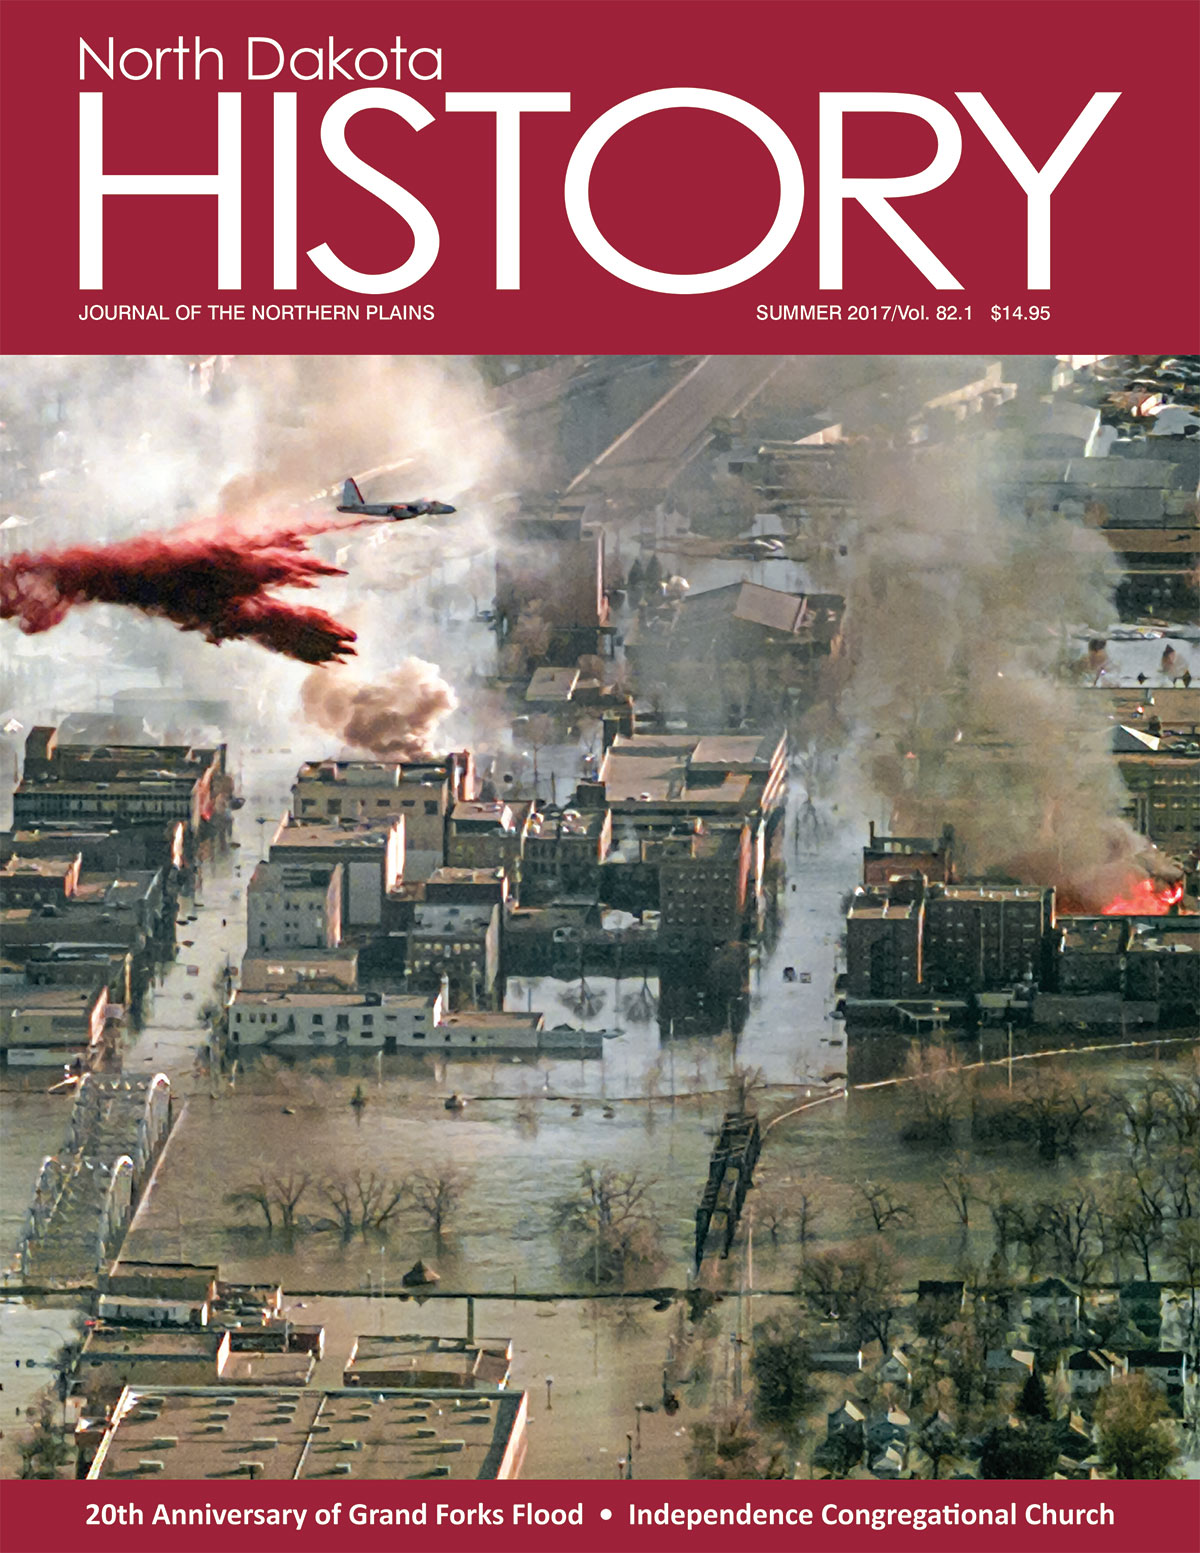 cover of North Dakota History vol 55.1